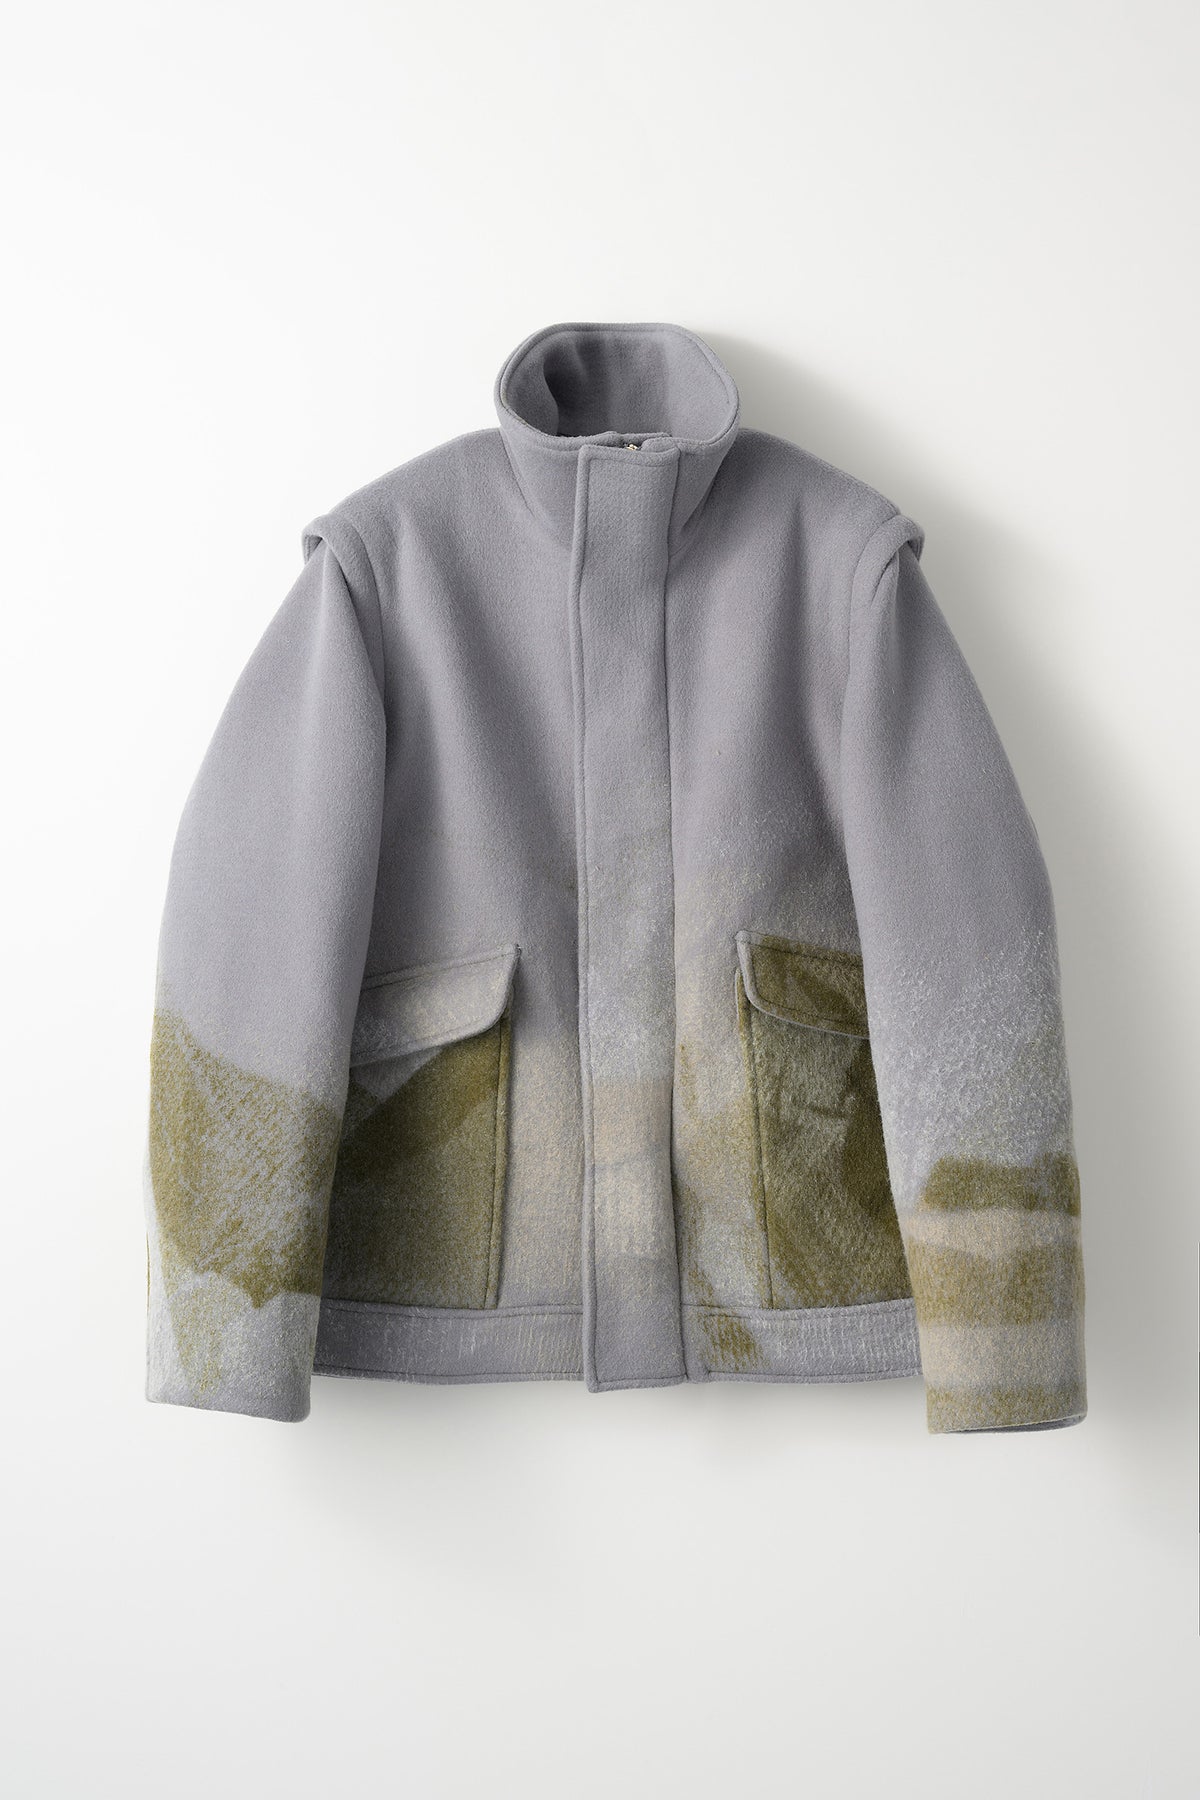 "Emerge" needle punch wool jacket (Gray)